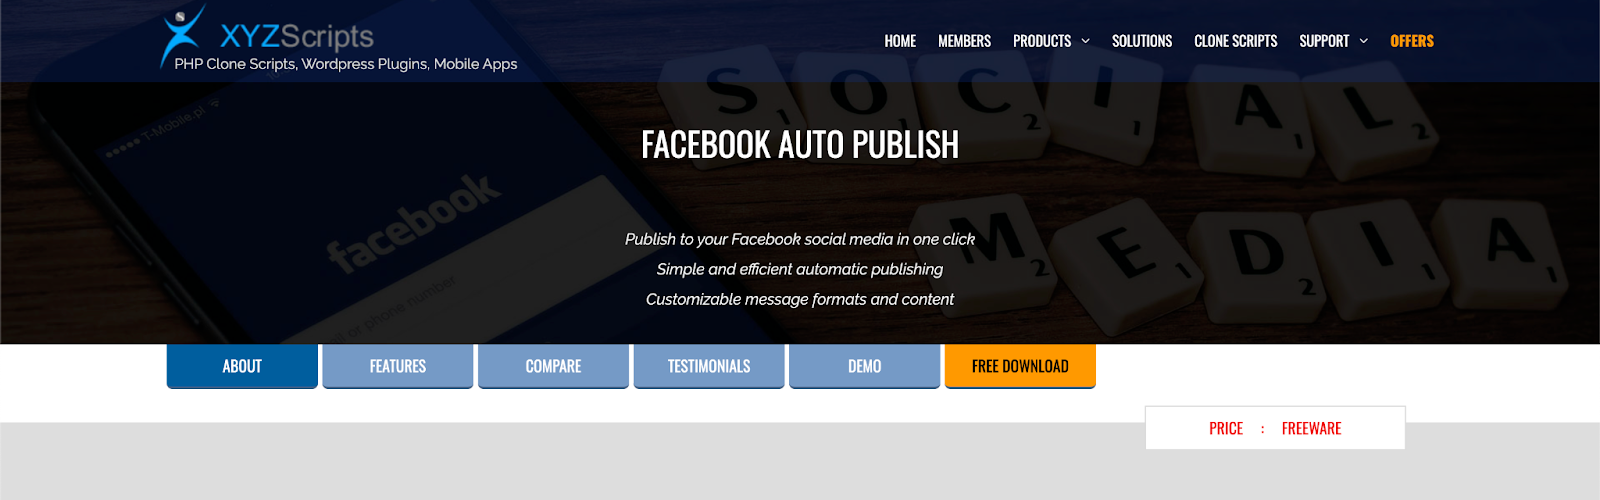 Auto-post to facebook WordPress plugins: WP2Social Auto-post